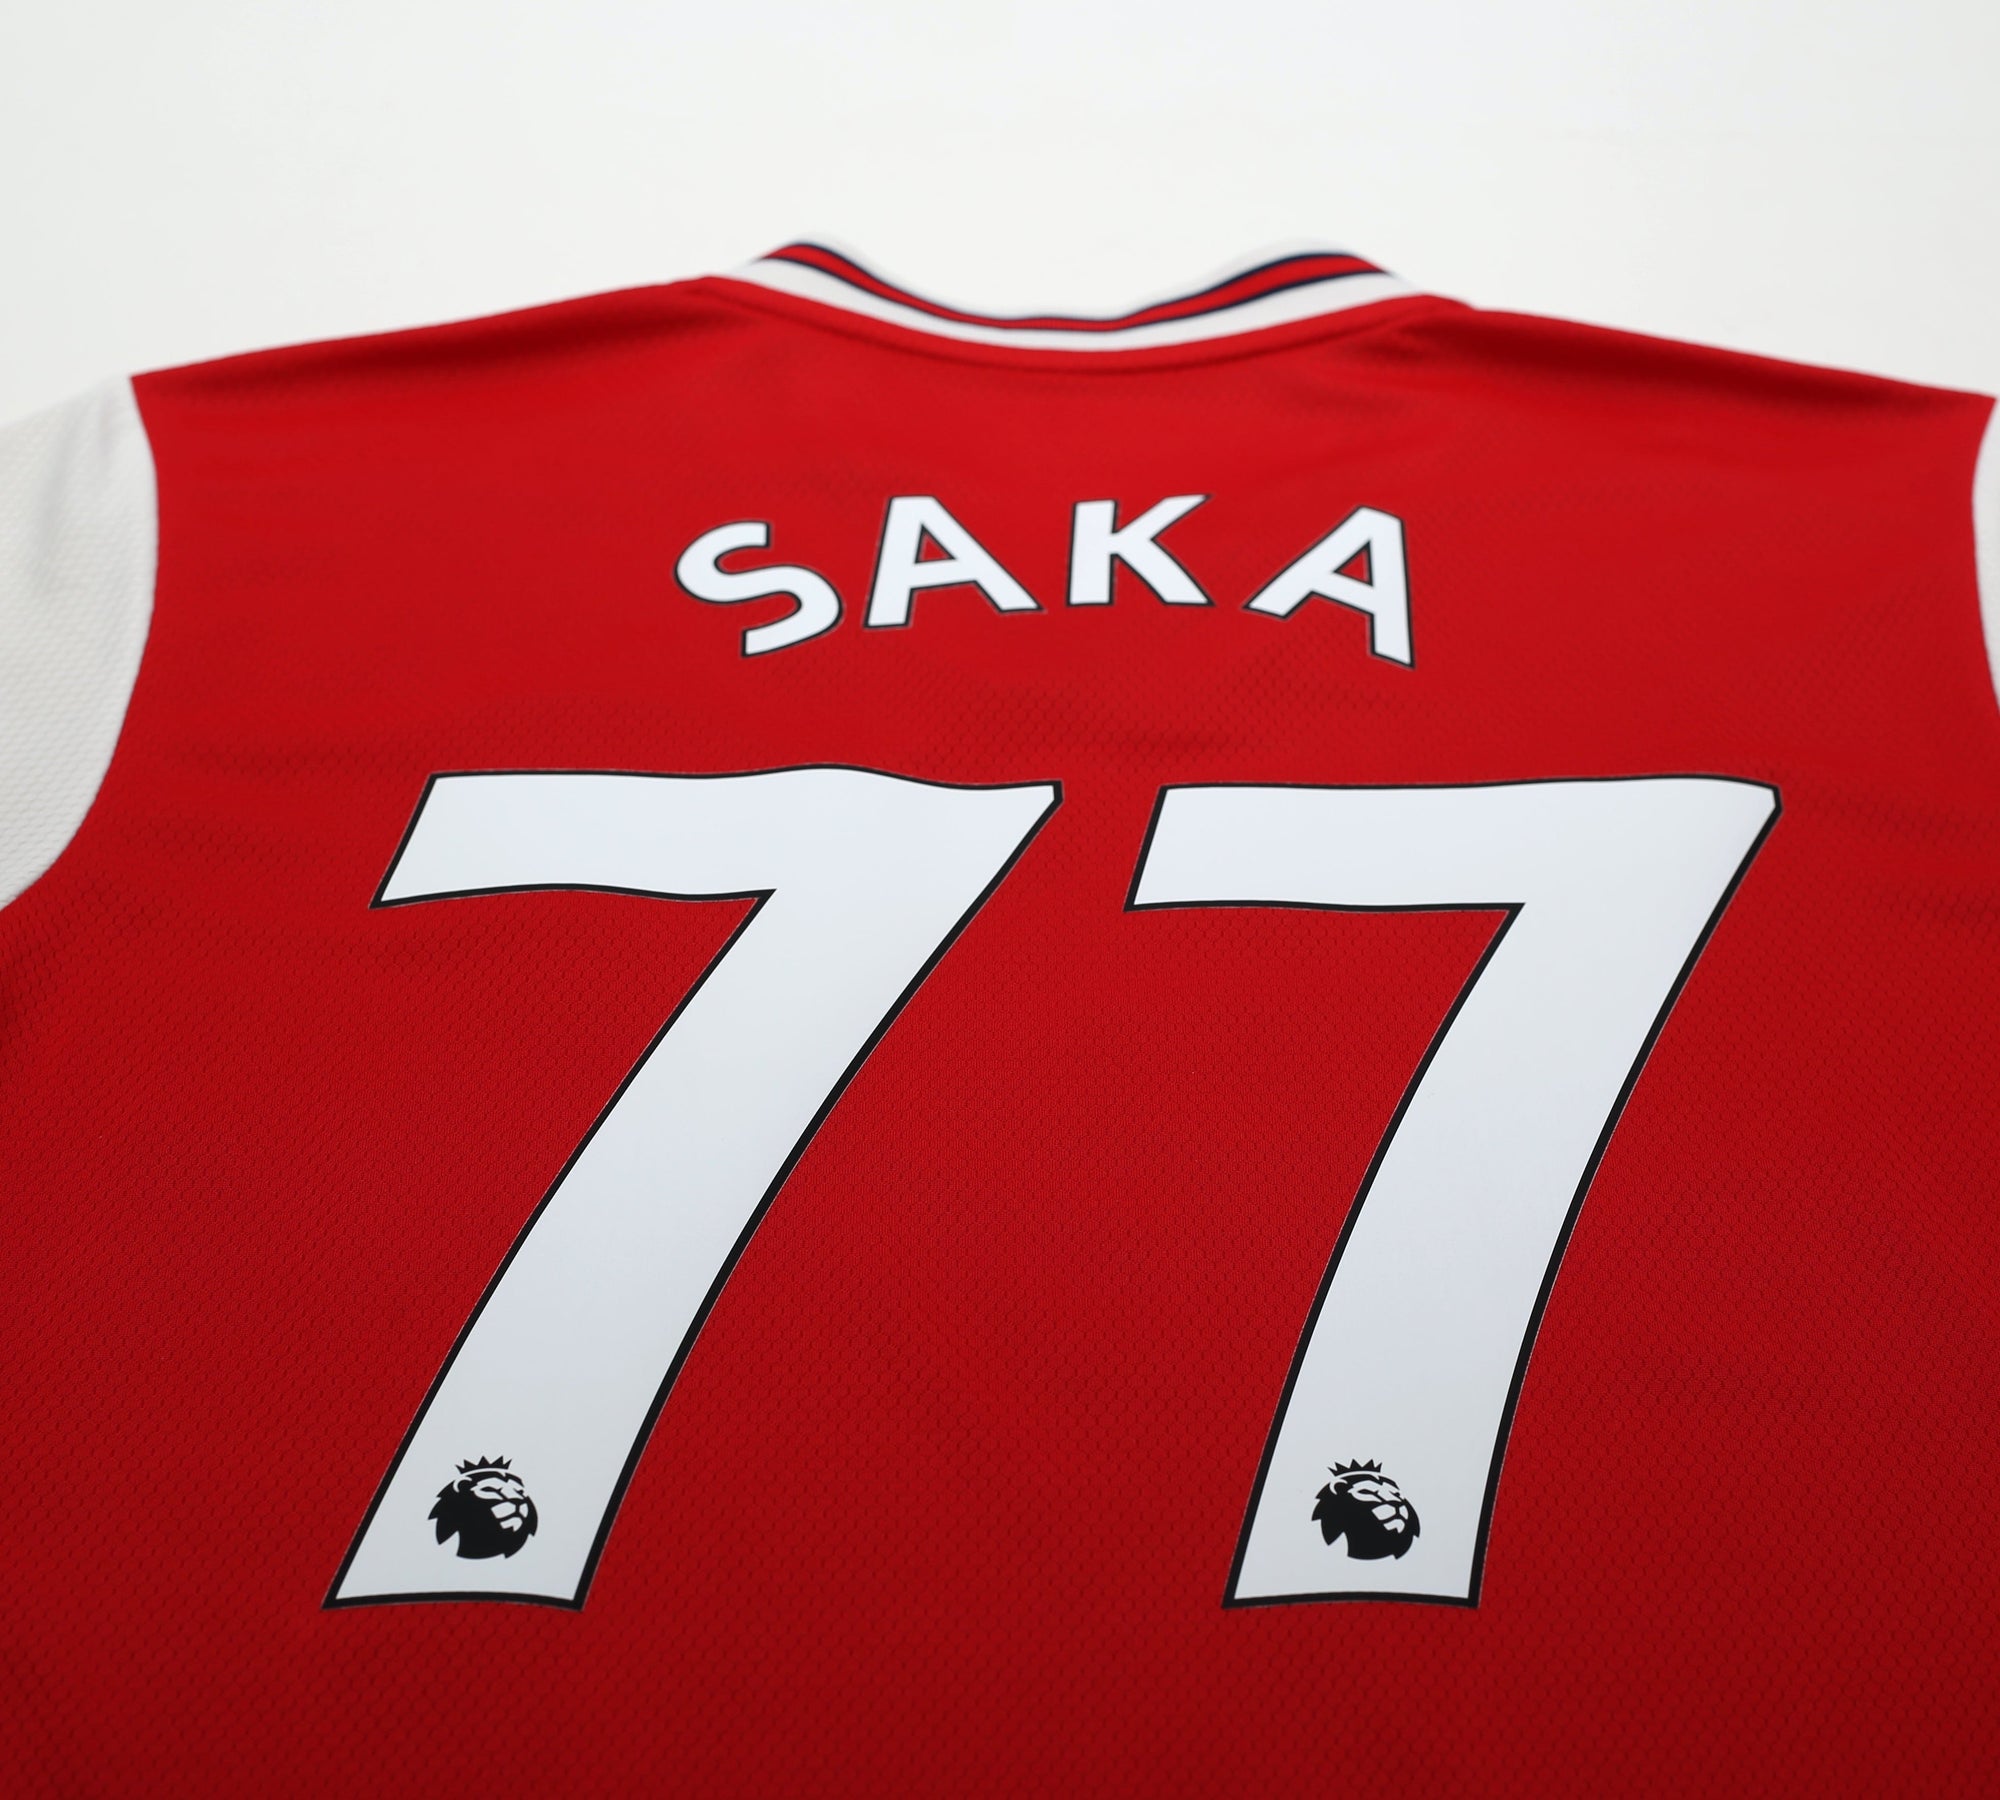 2019/20 SAKA #77 Arsenal Adidas Home Football Shirt (L)